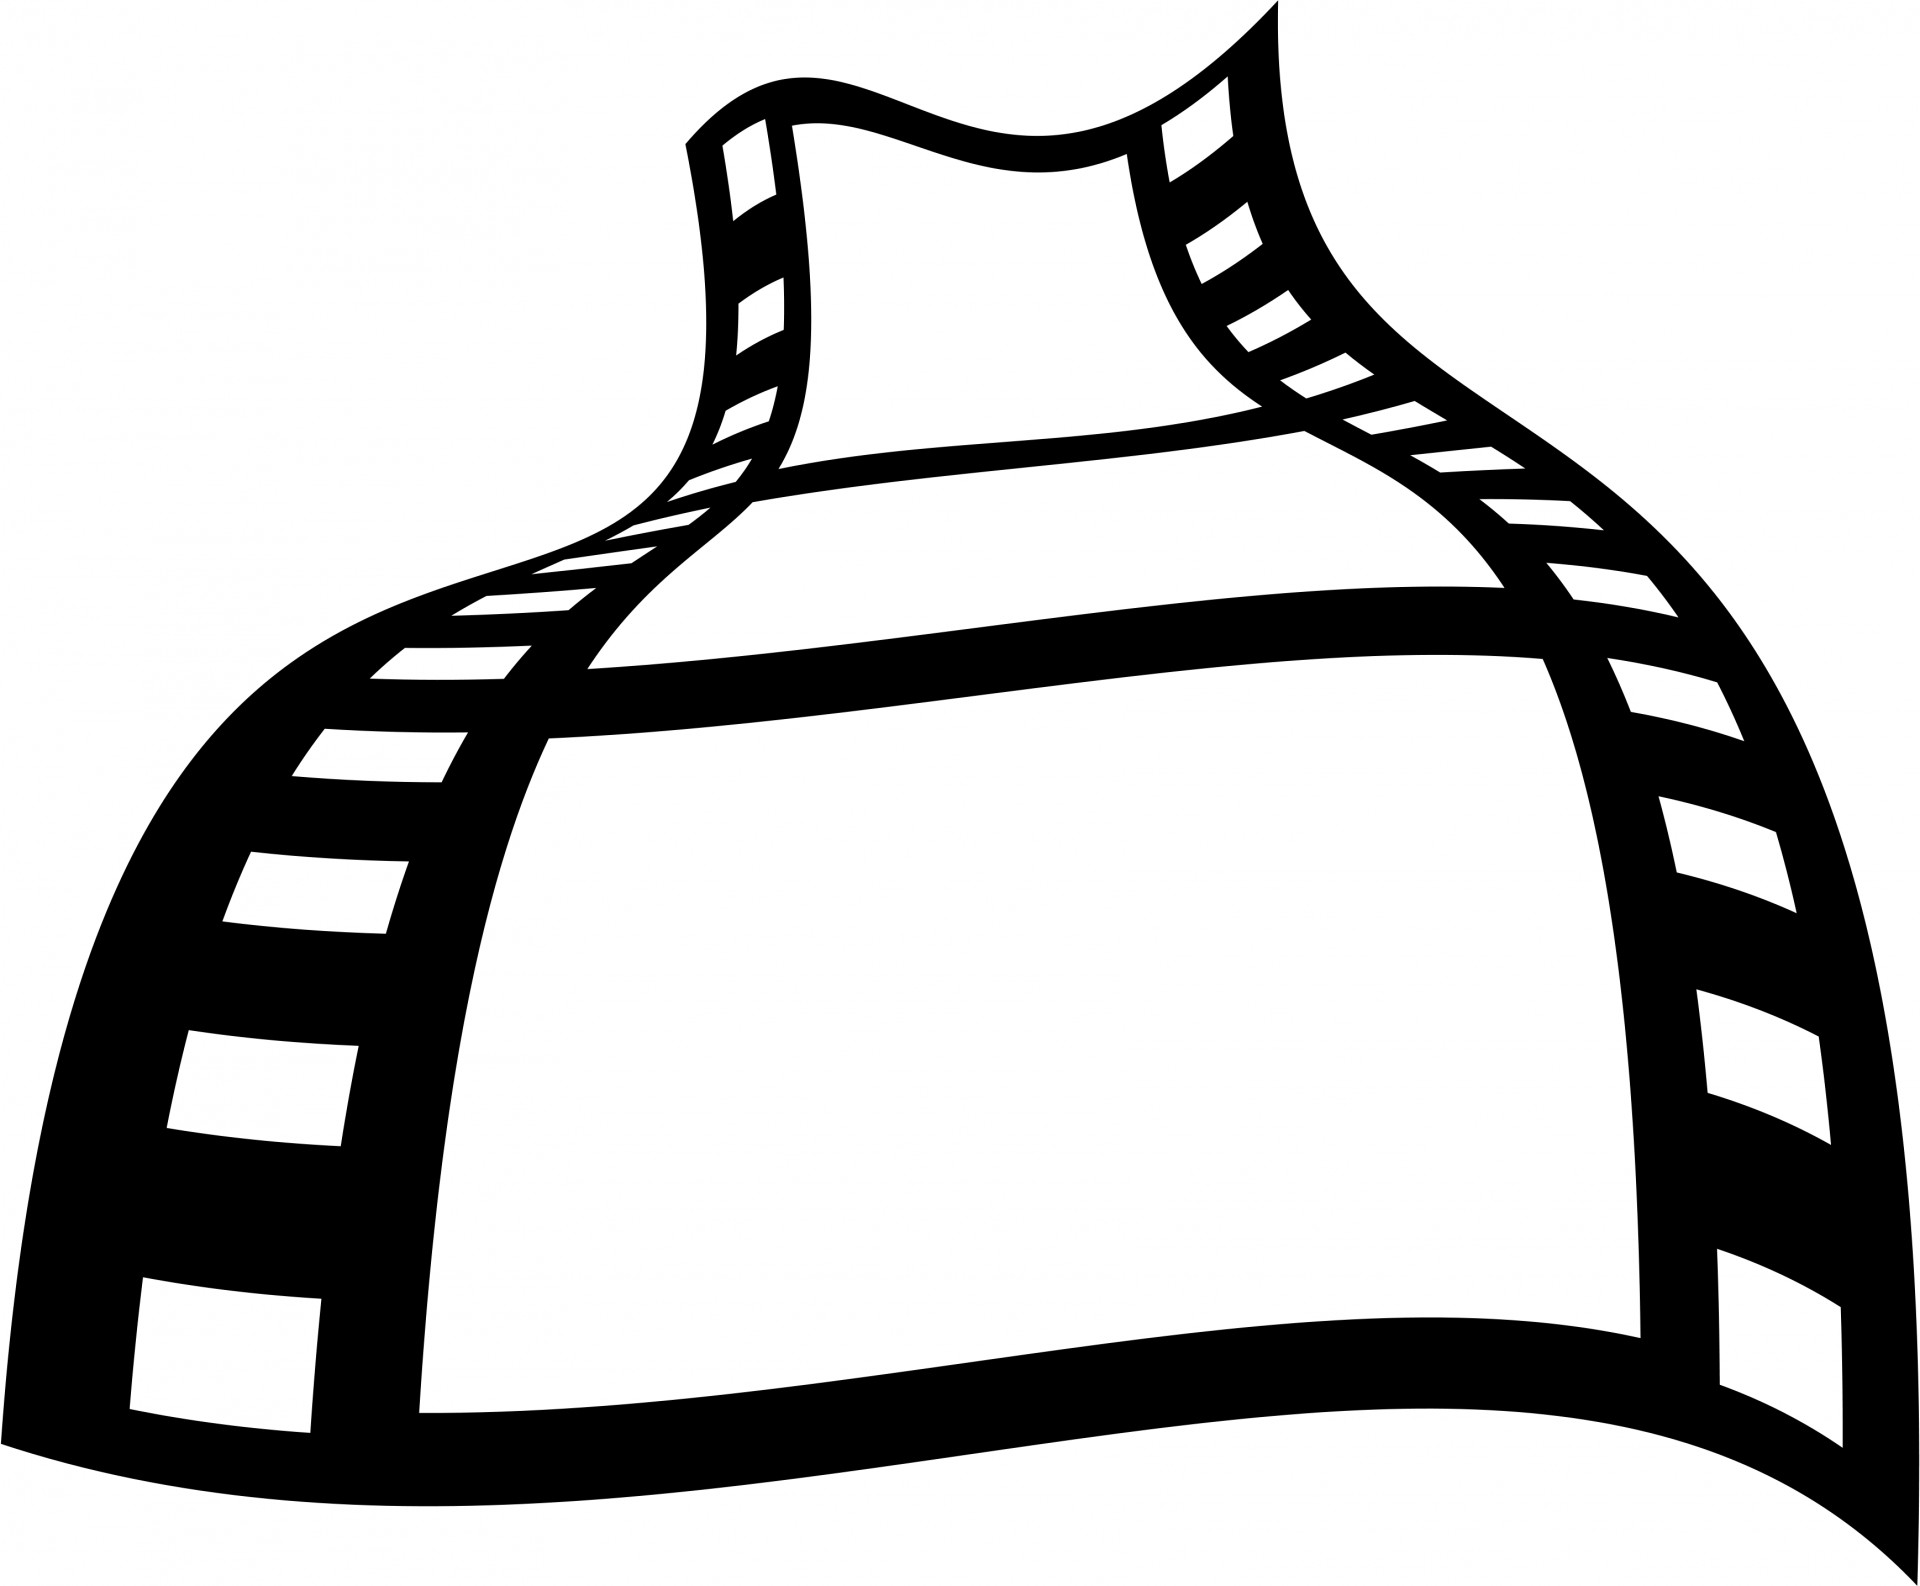 Movie Reel Movie Film Strip Image Clipart